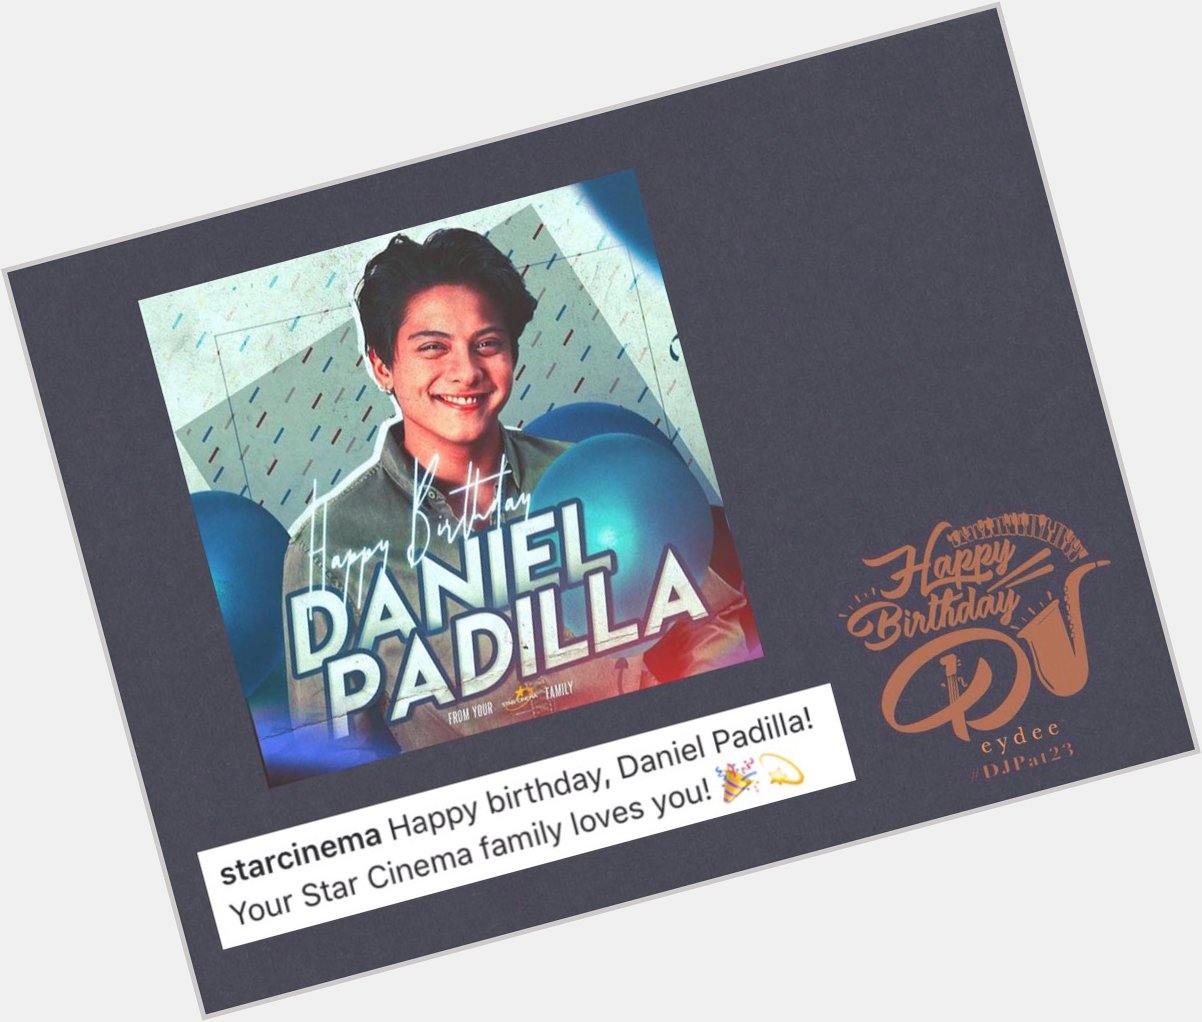  Happy Birthday, Daniel Padilla! Your Star Cinema family loves you!    Star Cinema 